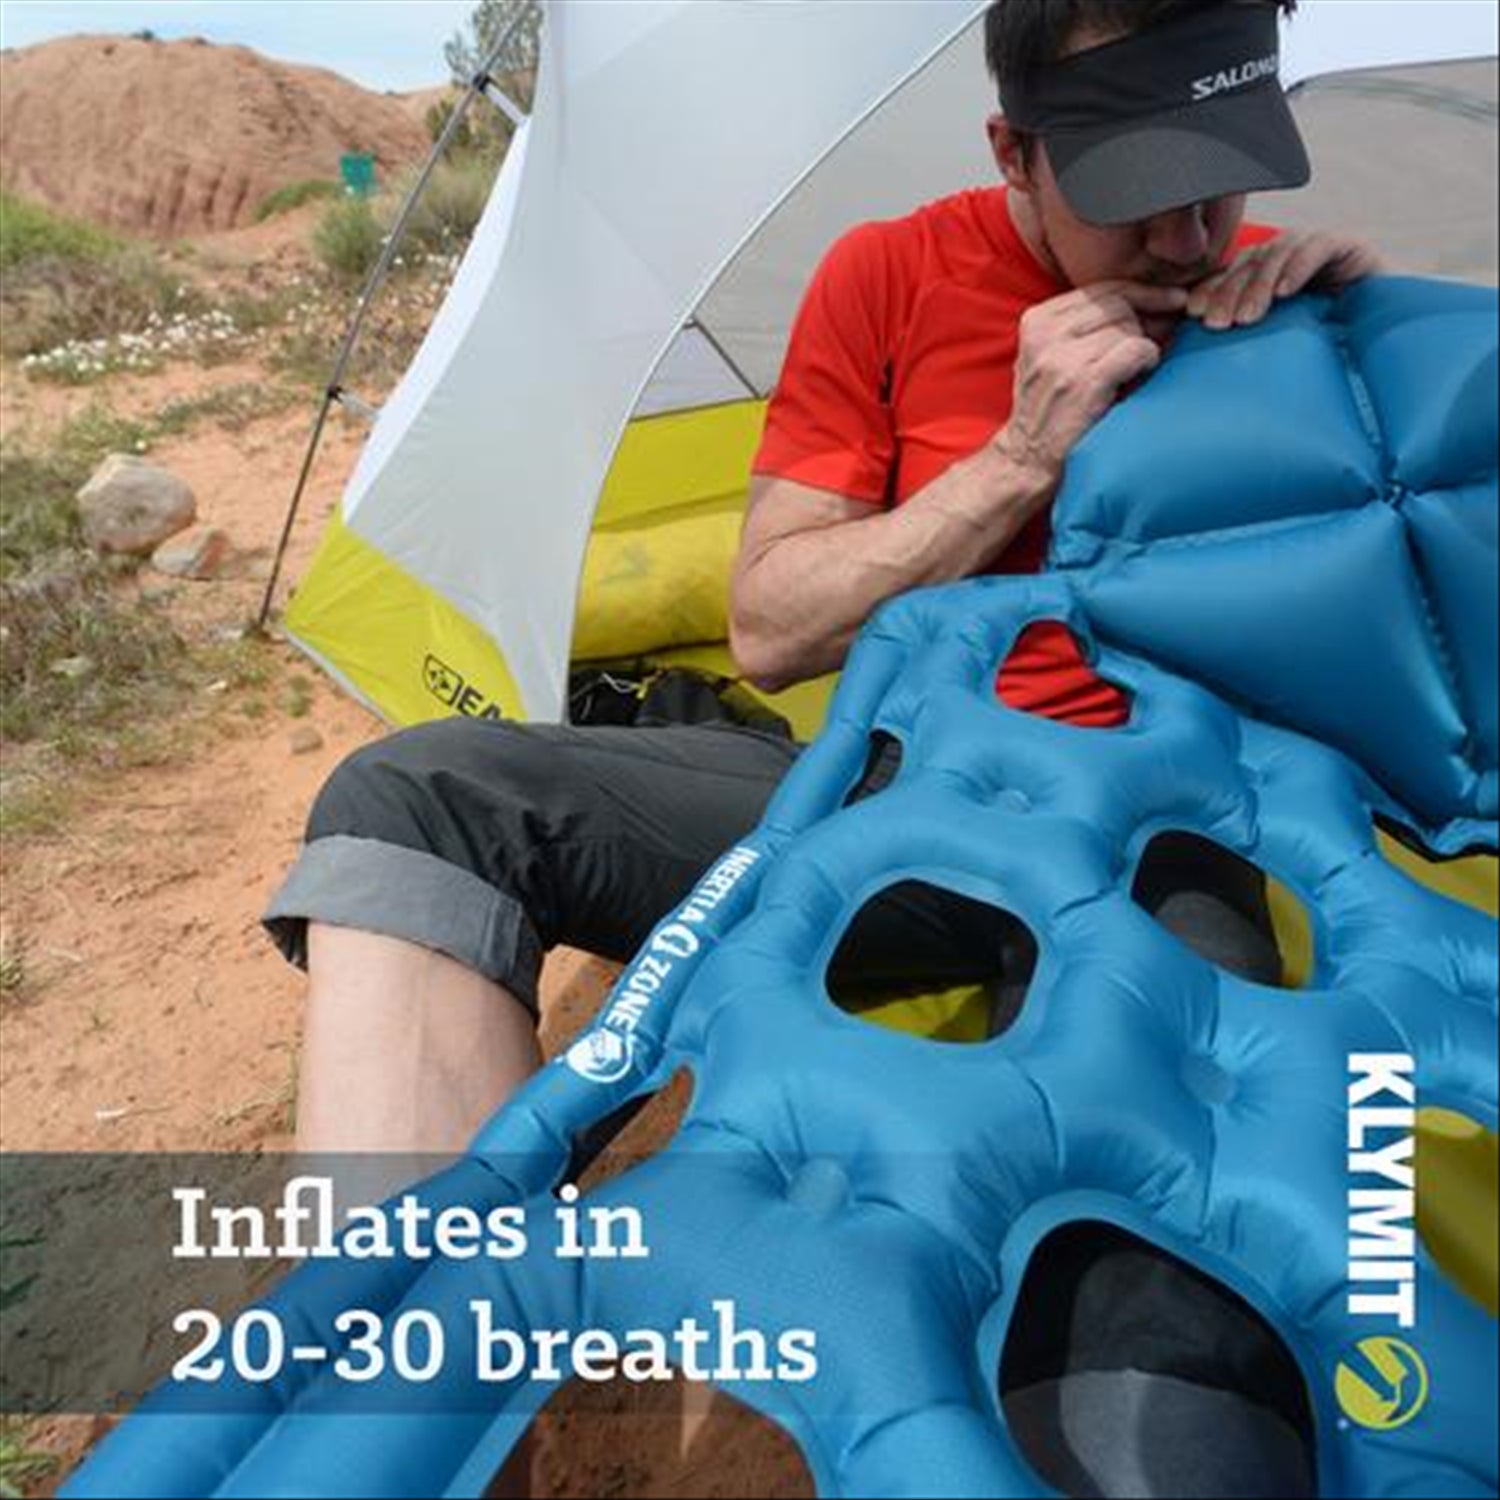 Klymit Klymit Ultralight Inertia Ozone Inflatable Pad Ultralight 369g